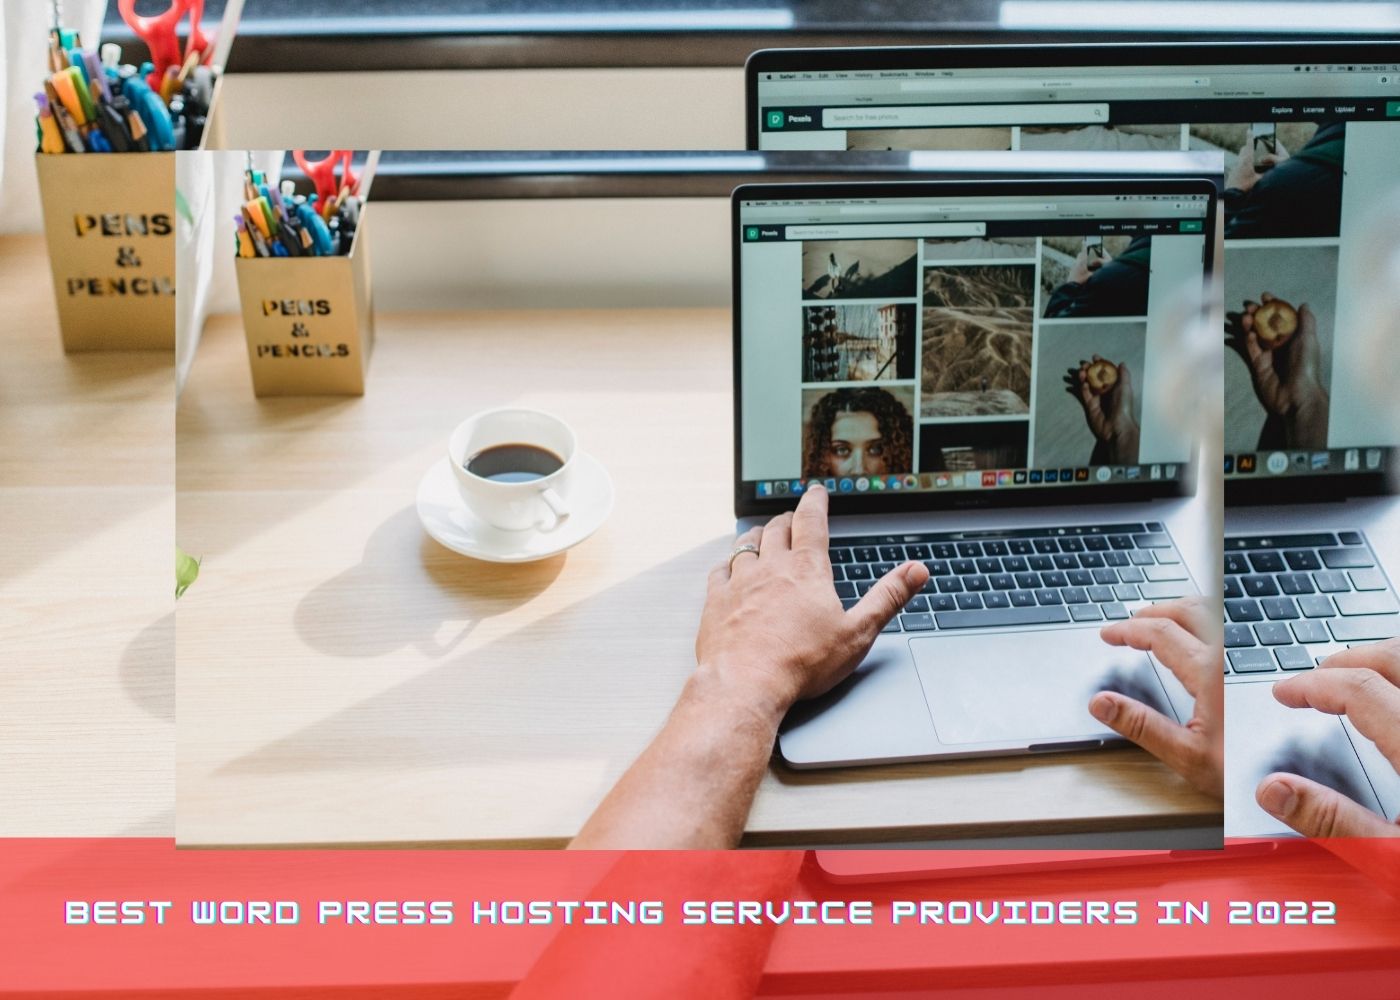 Best word press hosting service providers in 2022